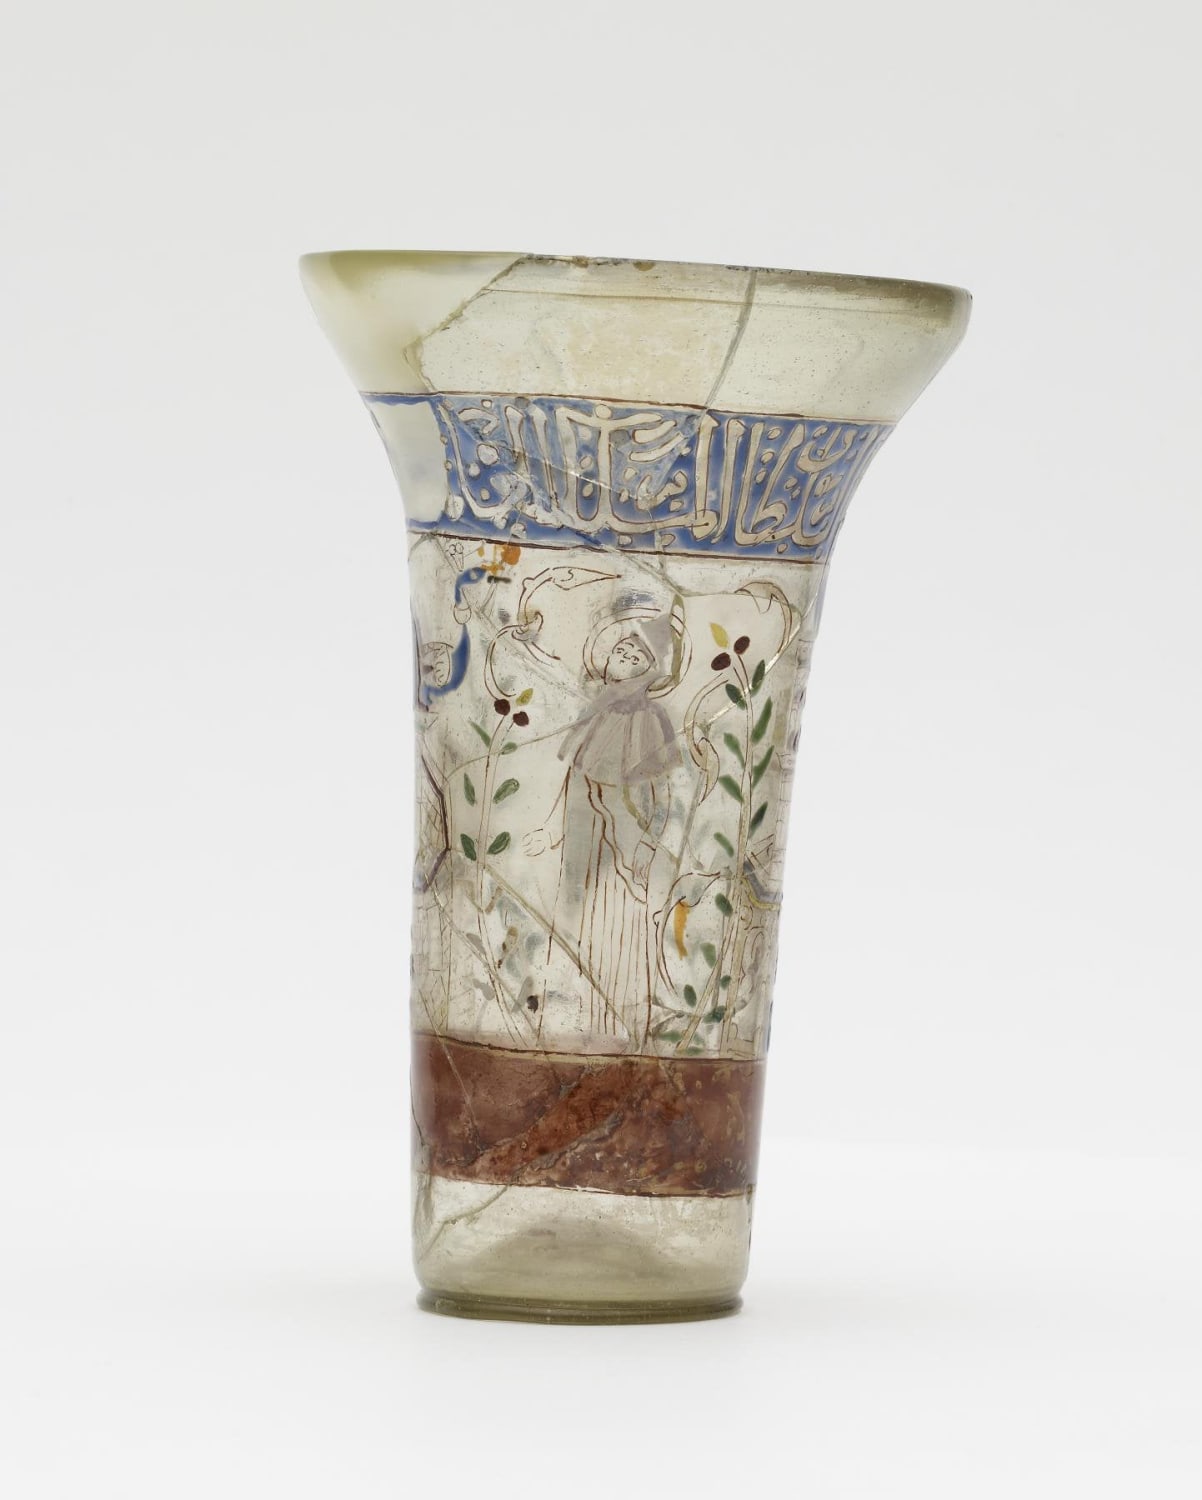 Crusader era glass beaker featuring saints, made in Syria, c. 1260 CE.